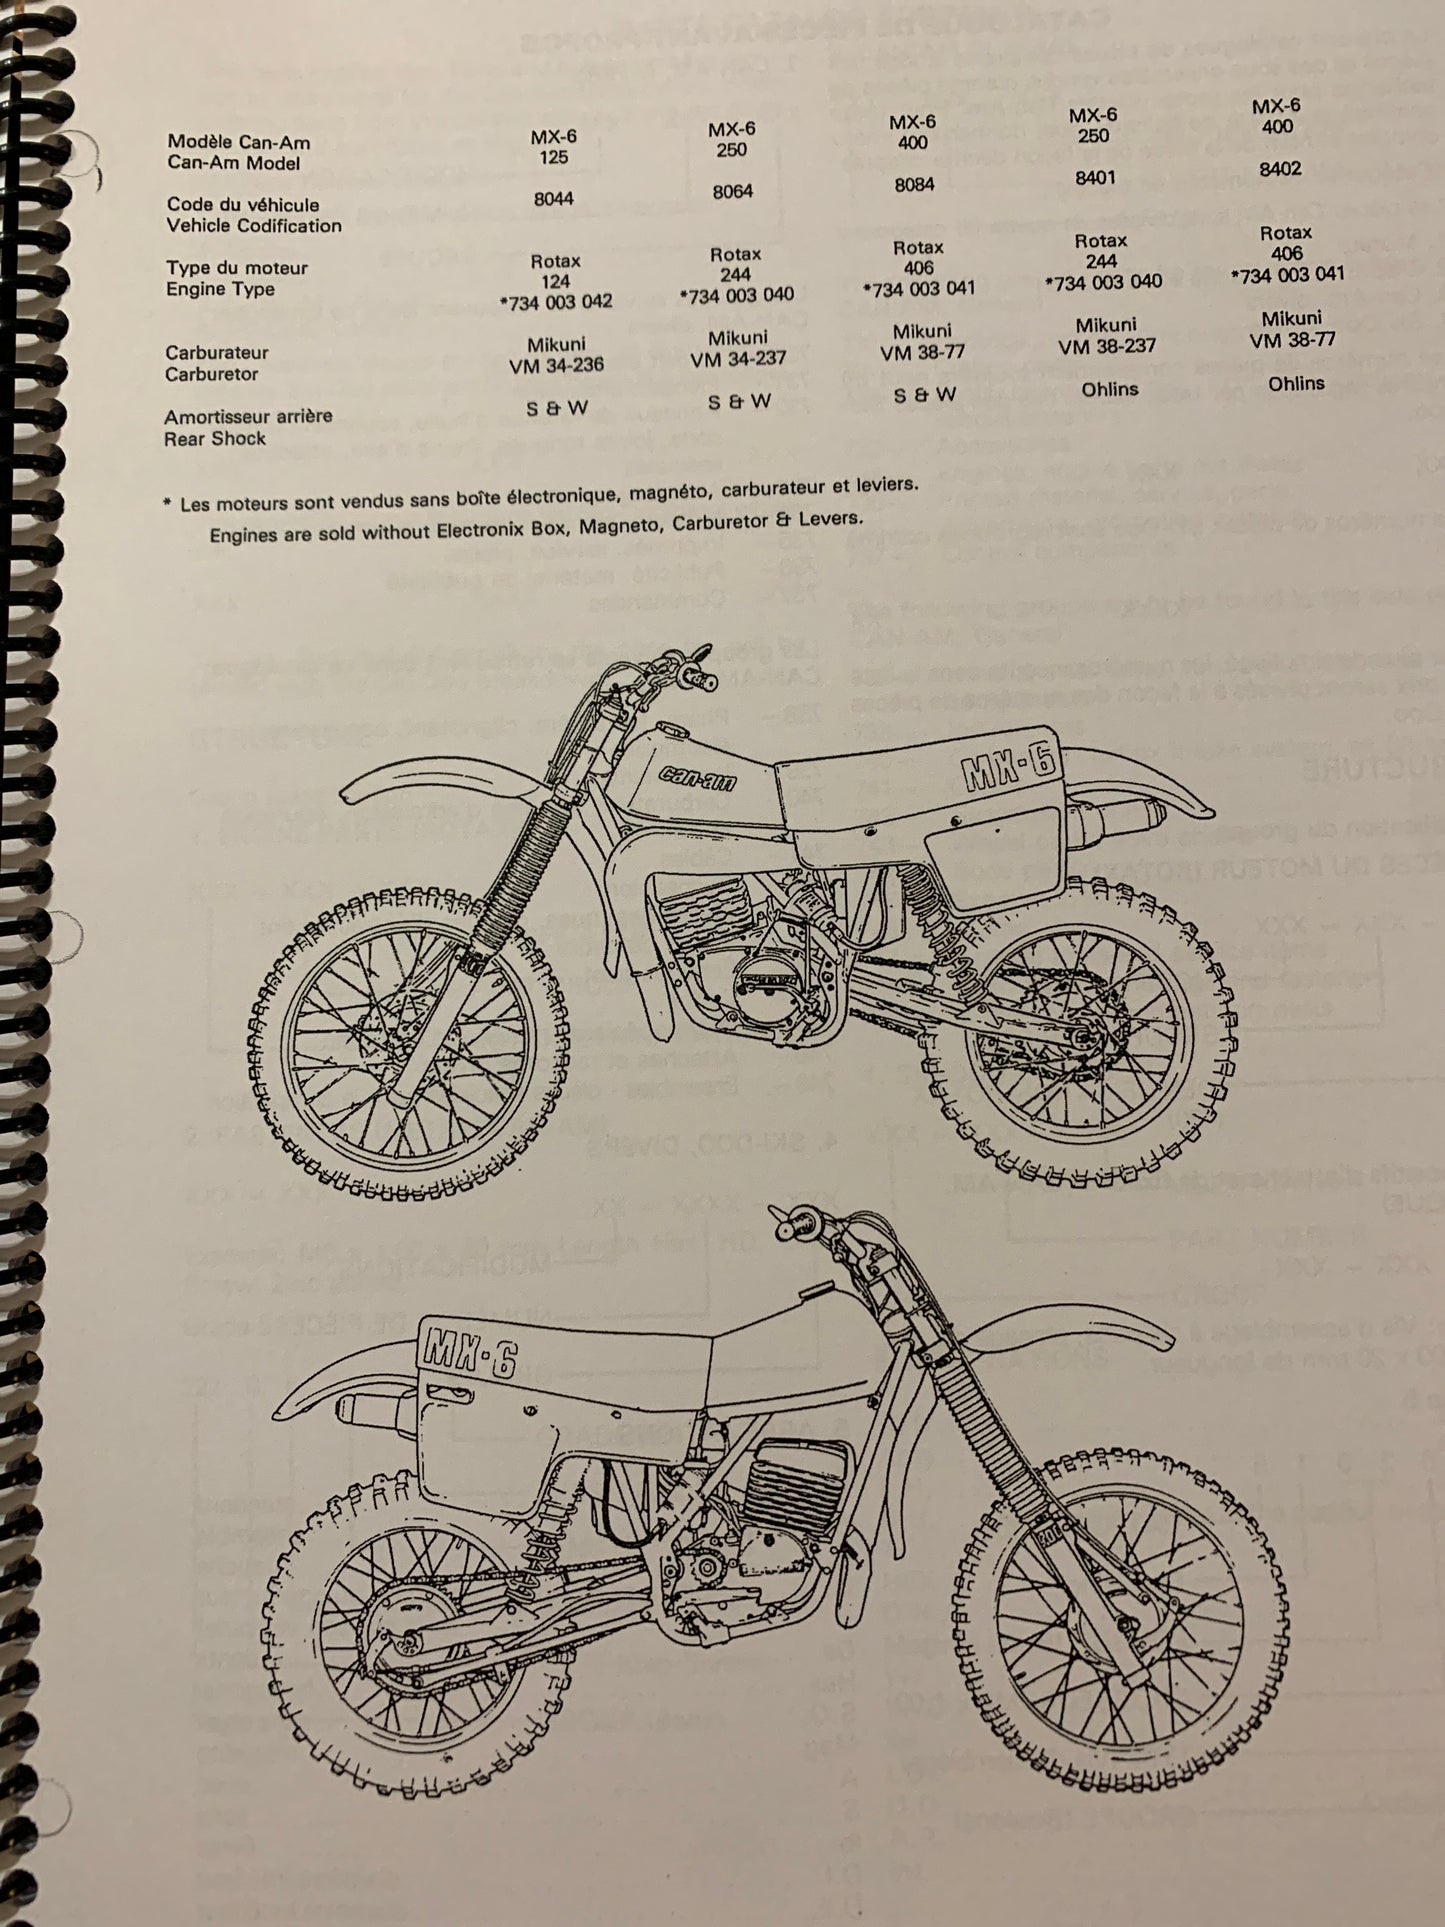 Can Am MX-6 parts catalog book